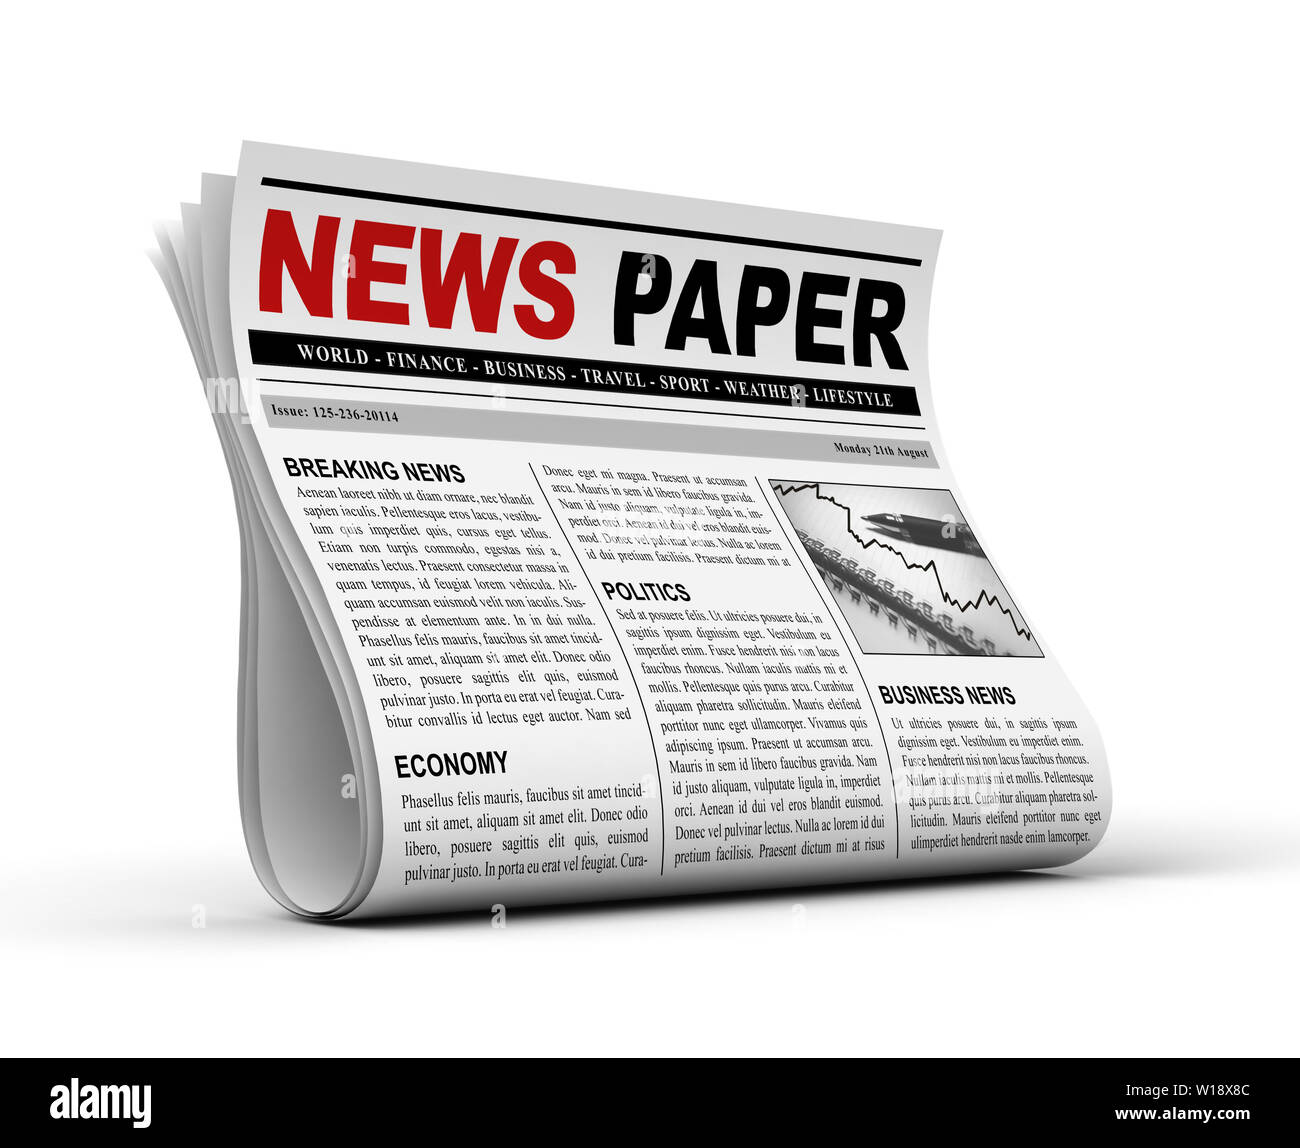 31,958 Newsprint Paper Images, Stock Photos, 3D objects, & Vectors